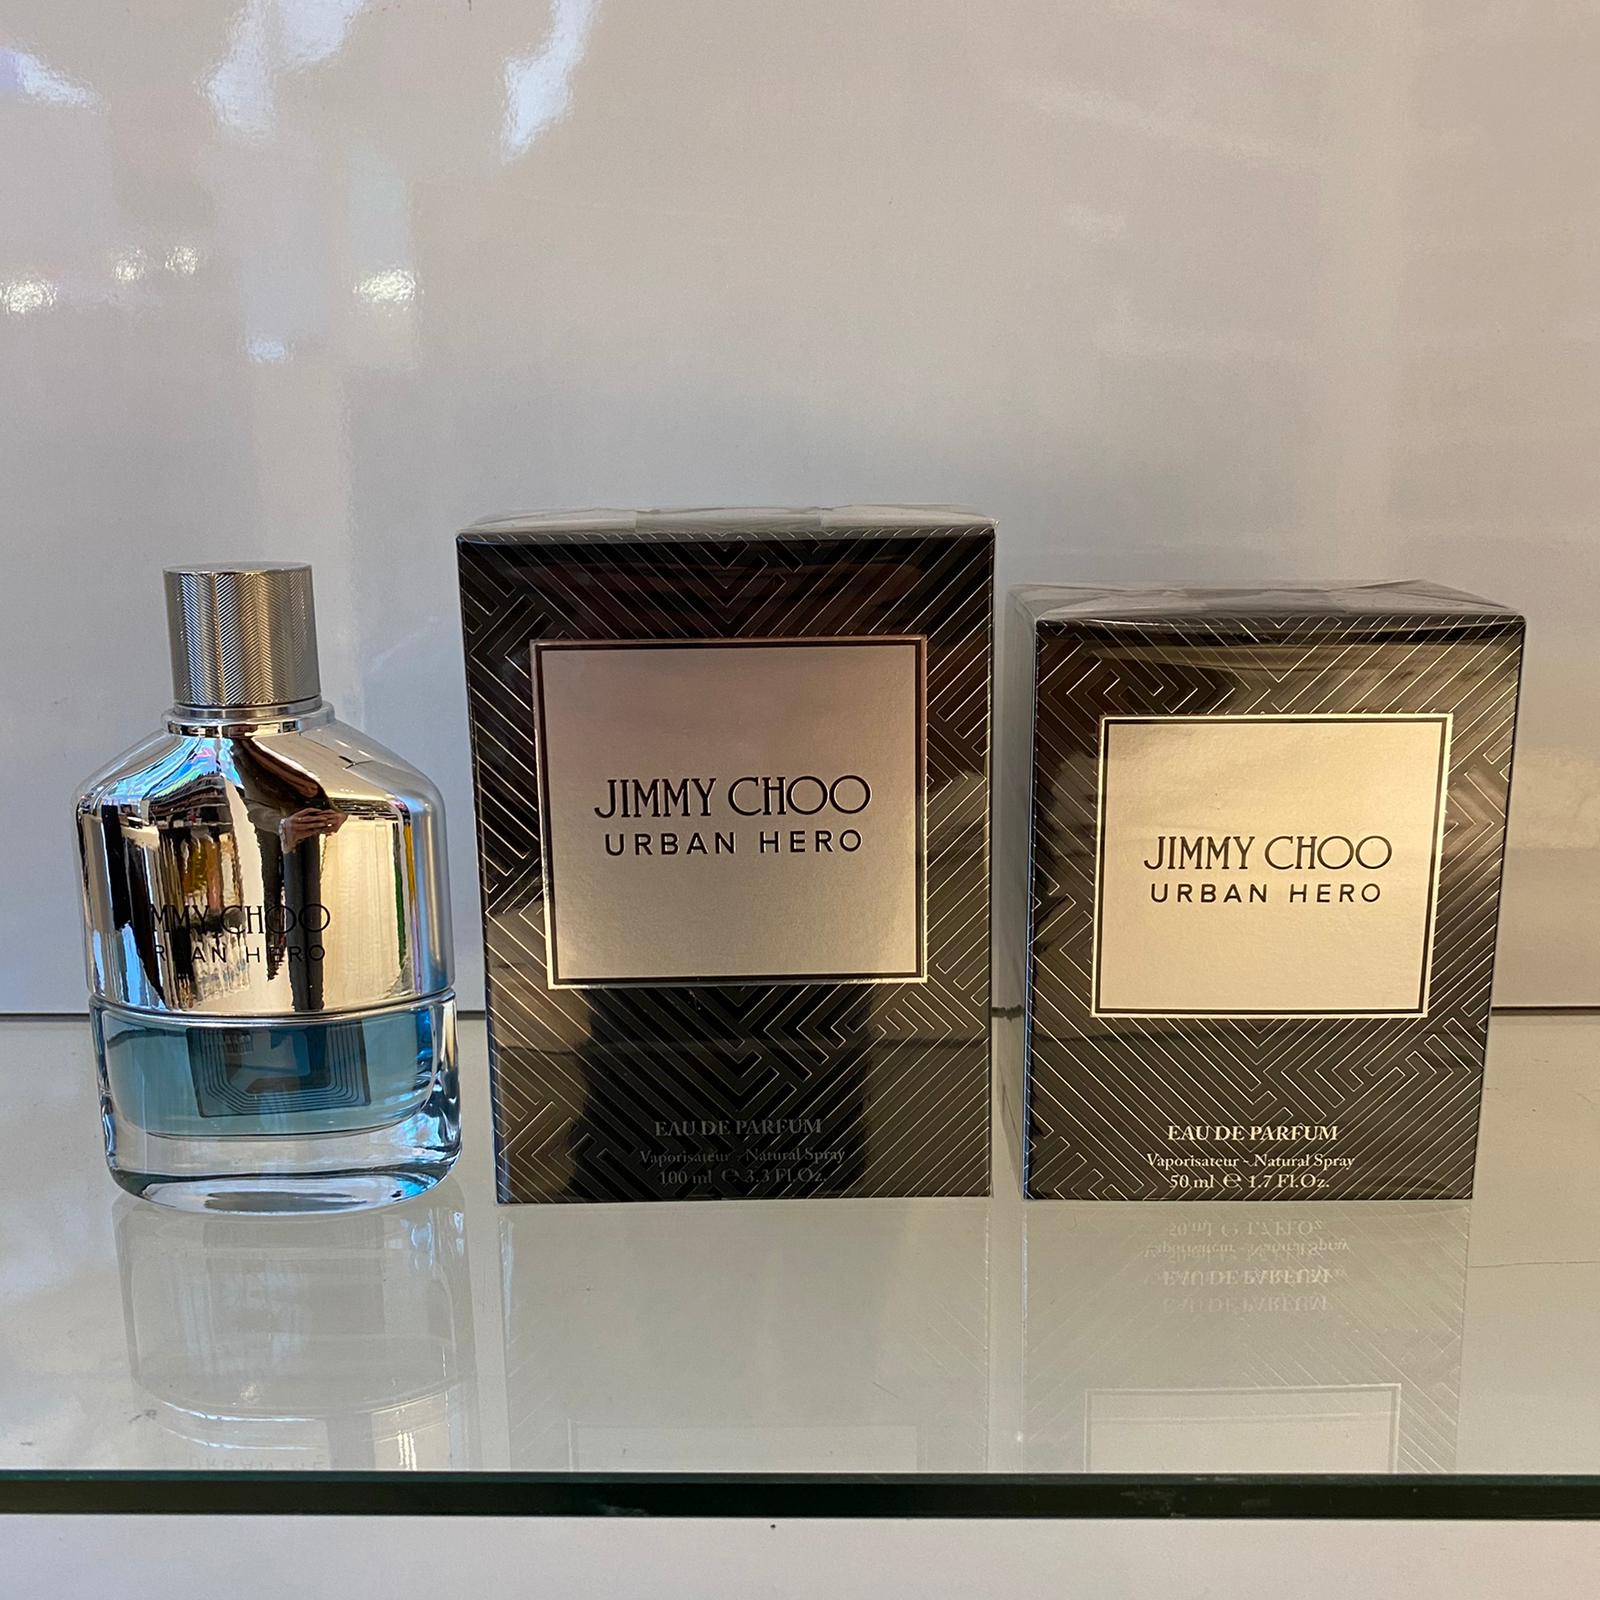 Jimmy Choo Urban Hero Eau de parfum 50 ml